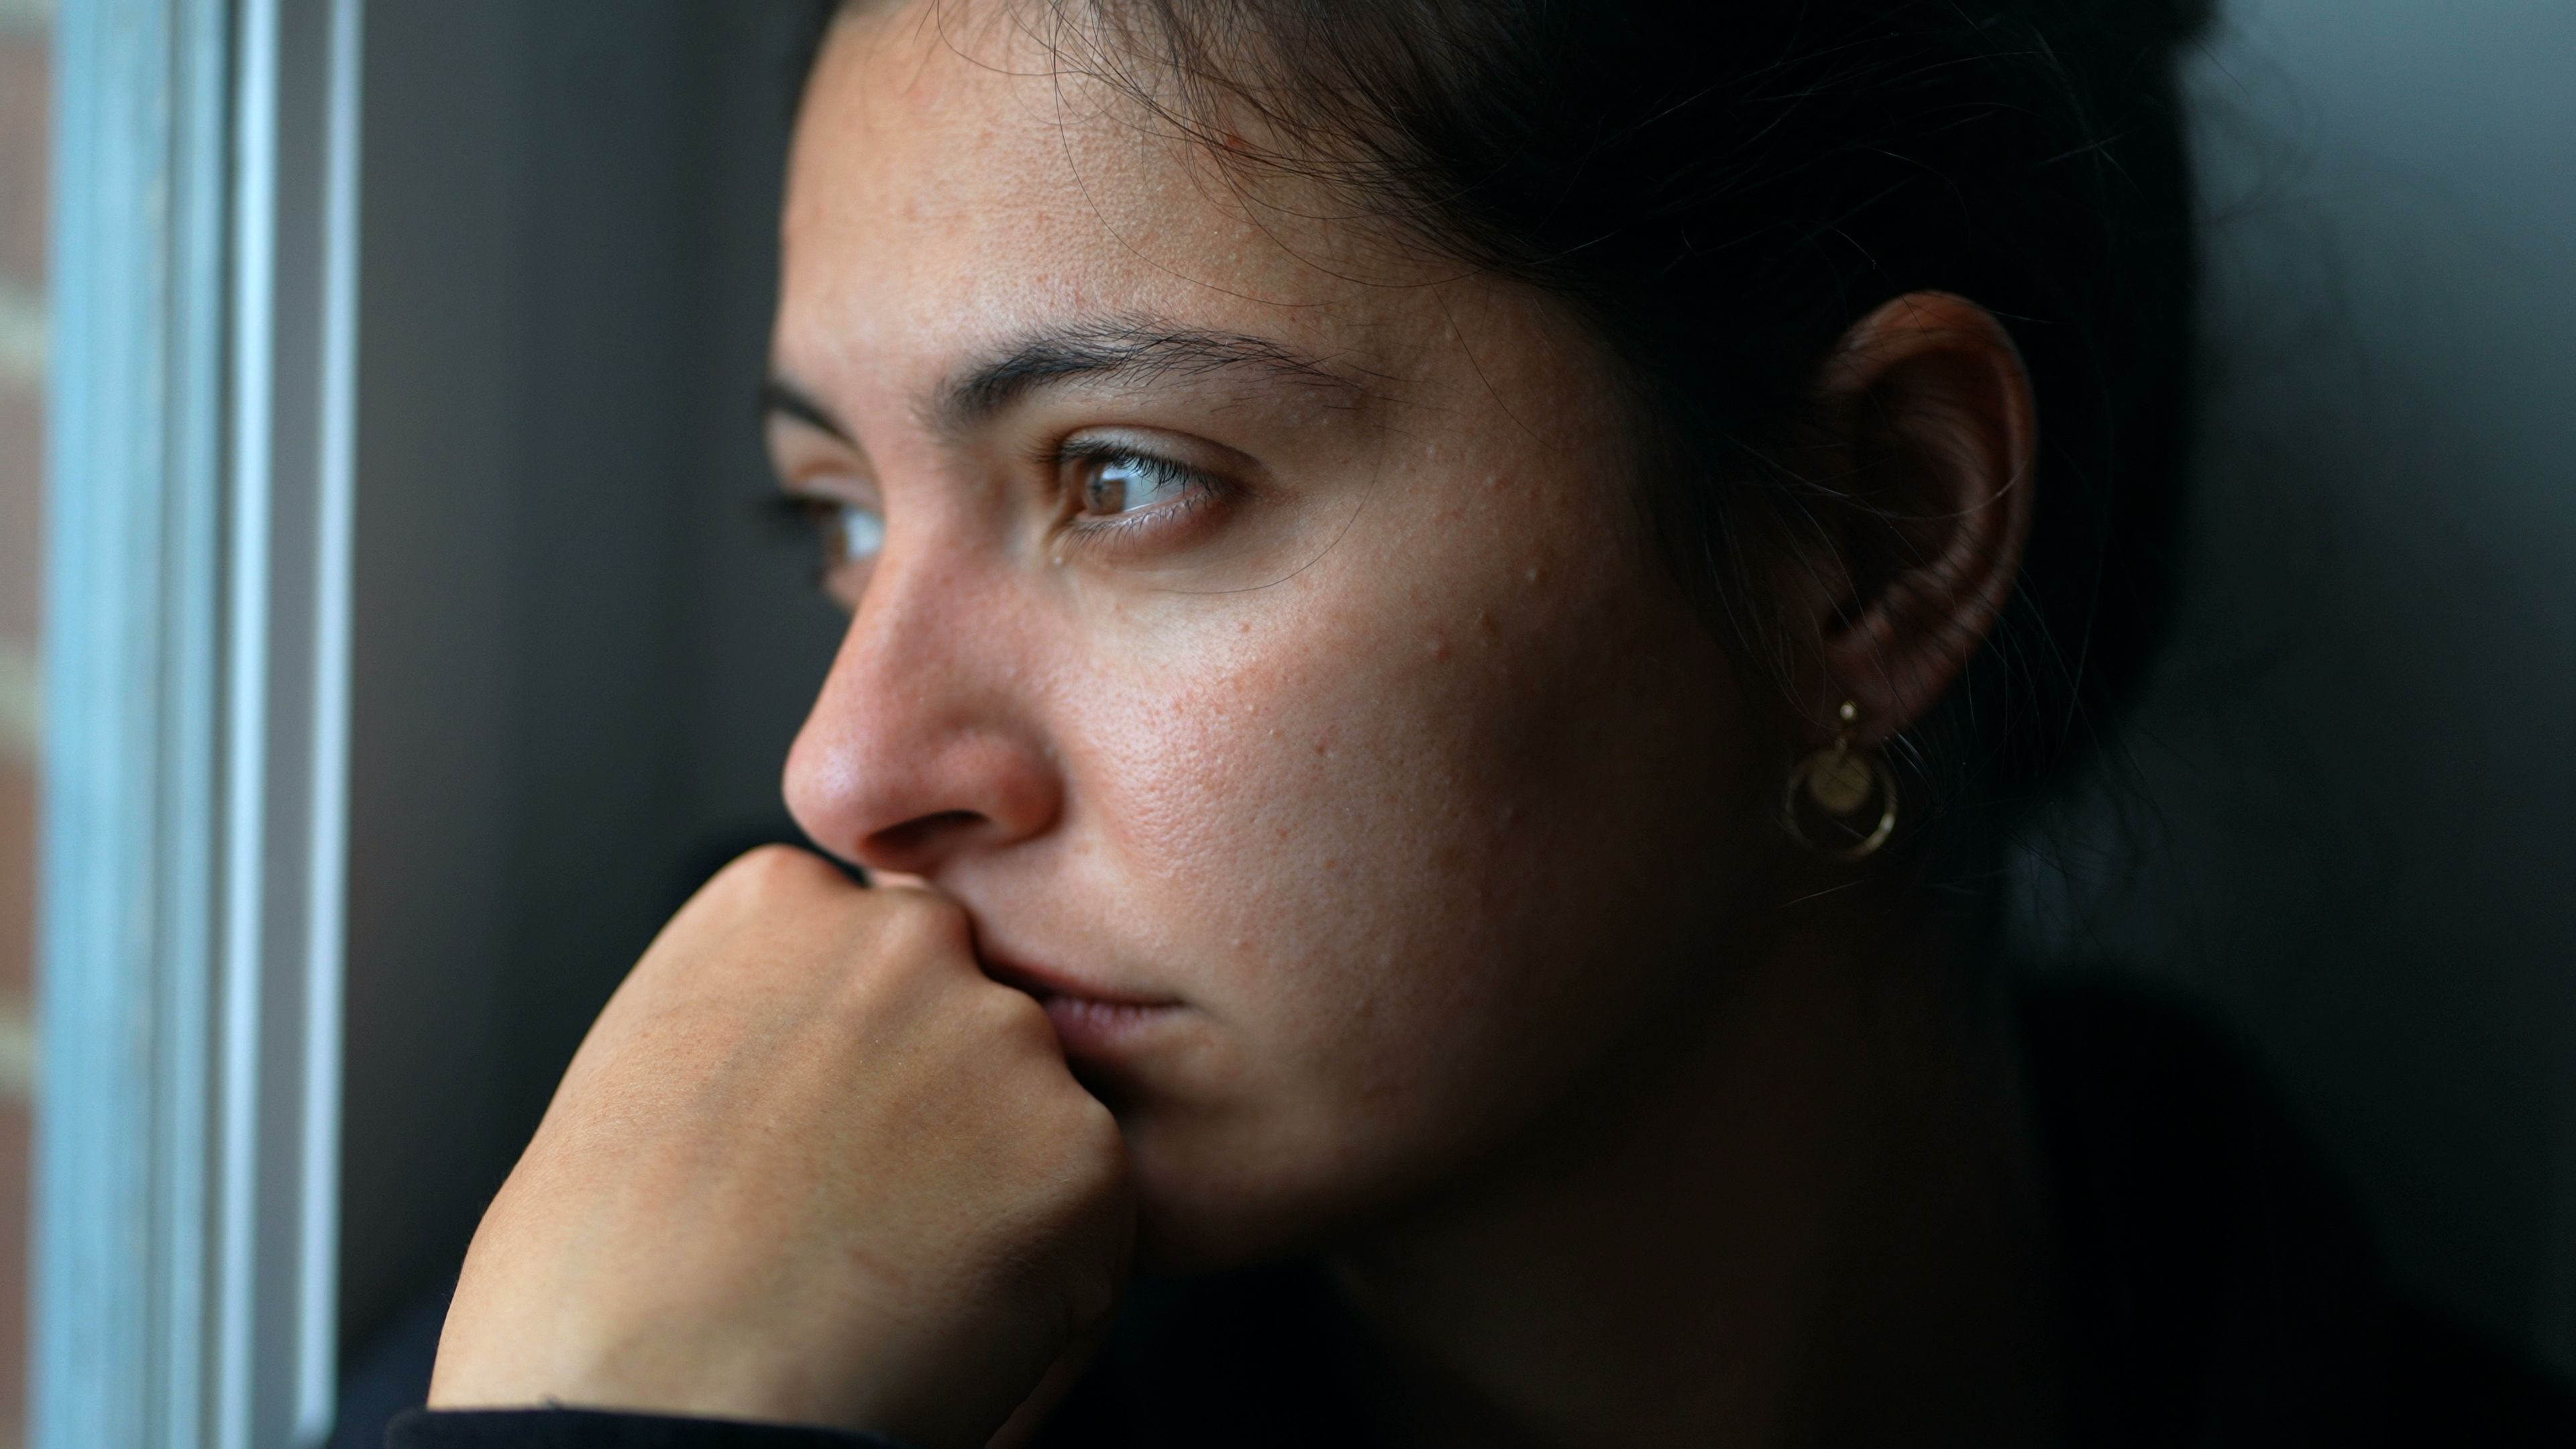 Une femme à l'air triste | Source : Shutterstock